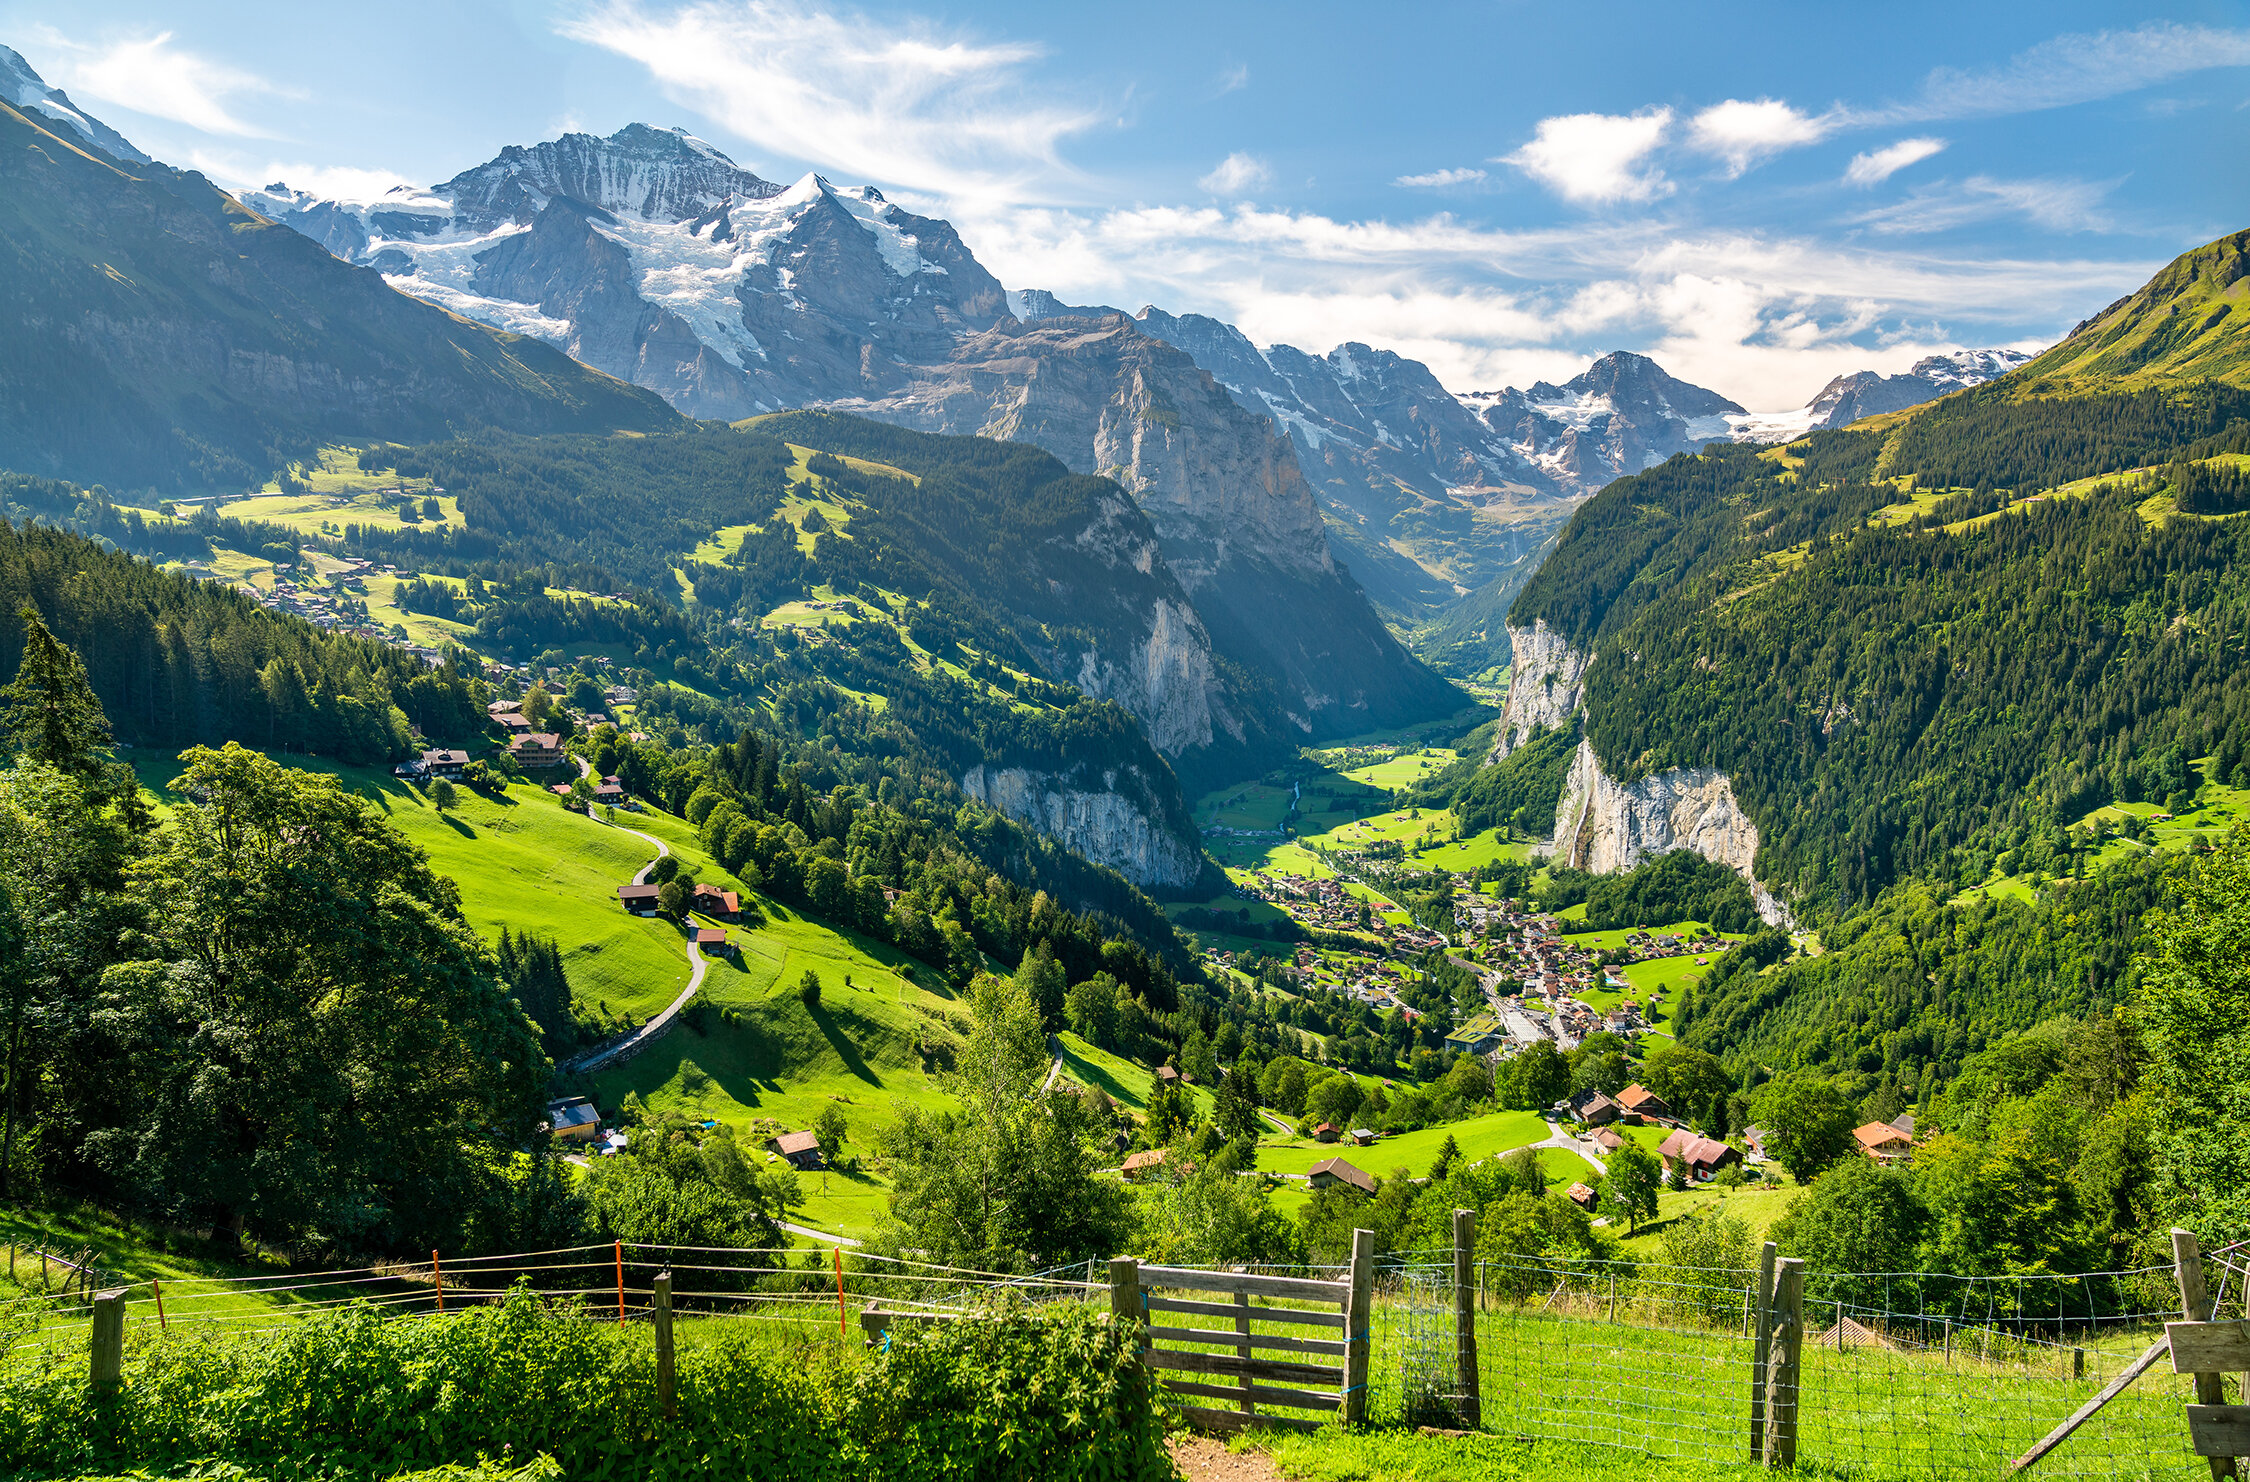  The magical Berner Oberland above the hillside village of Wengen, Switzerland.  